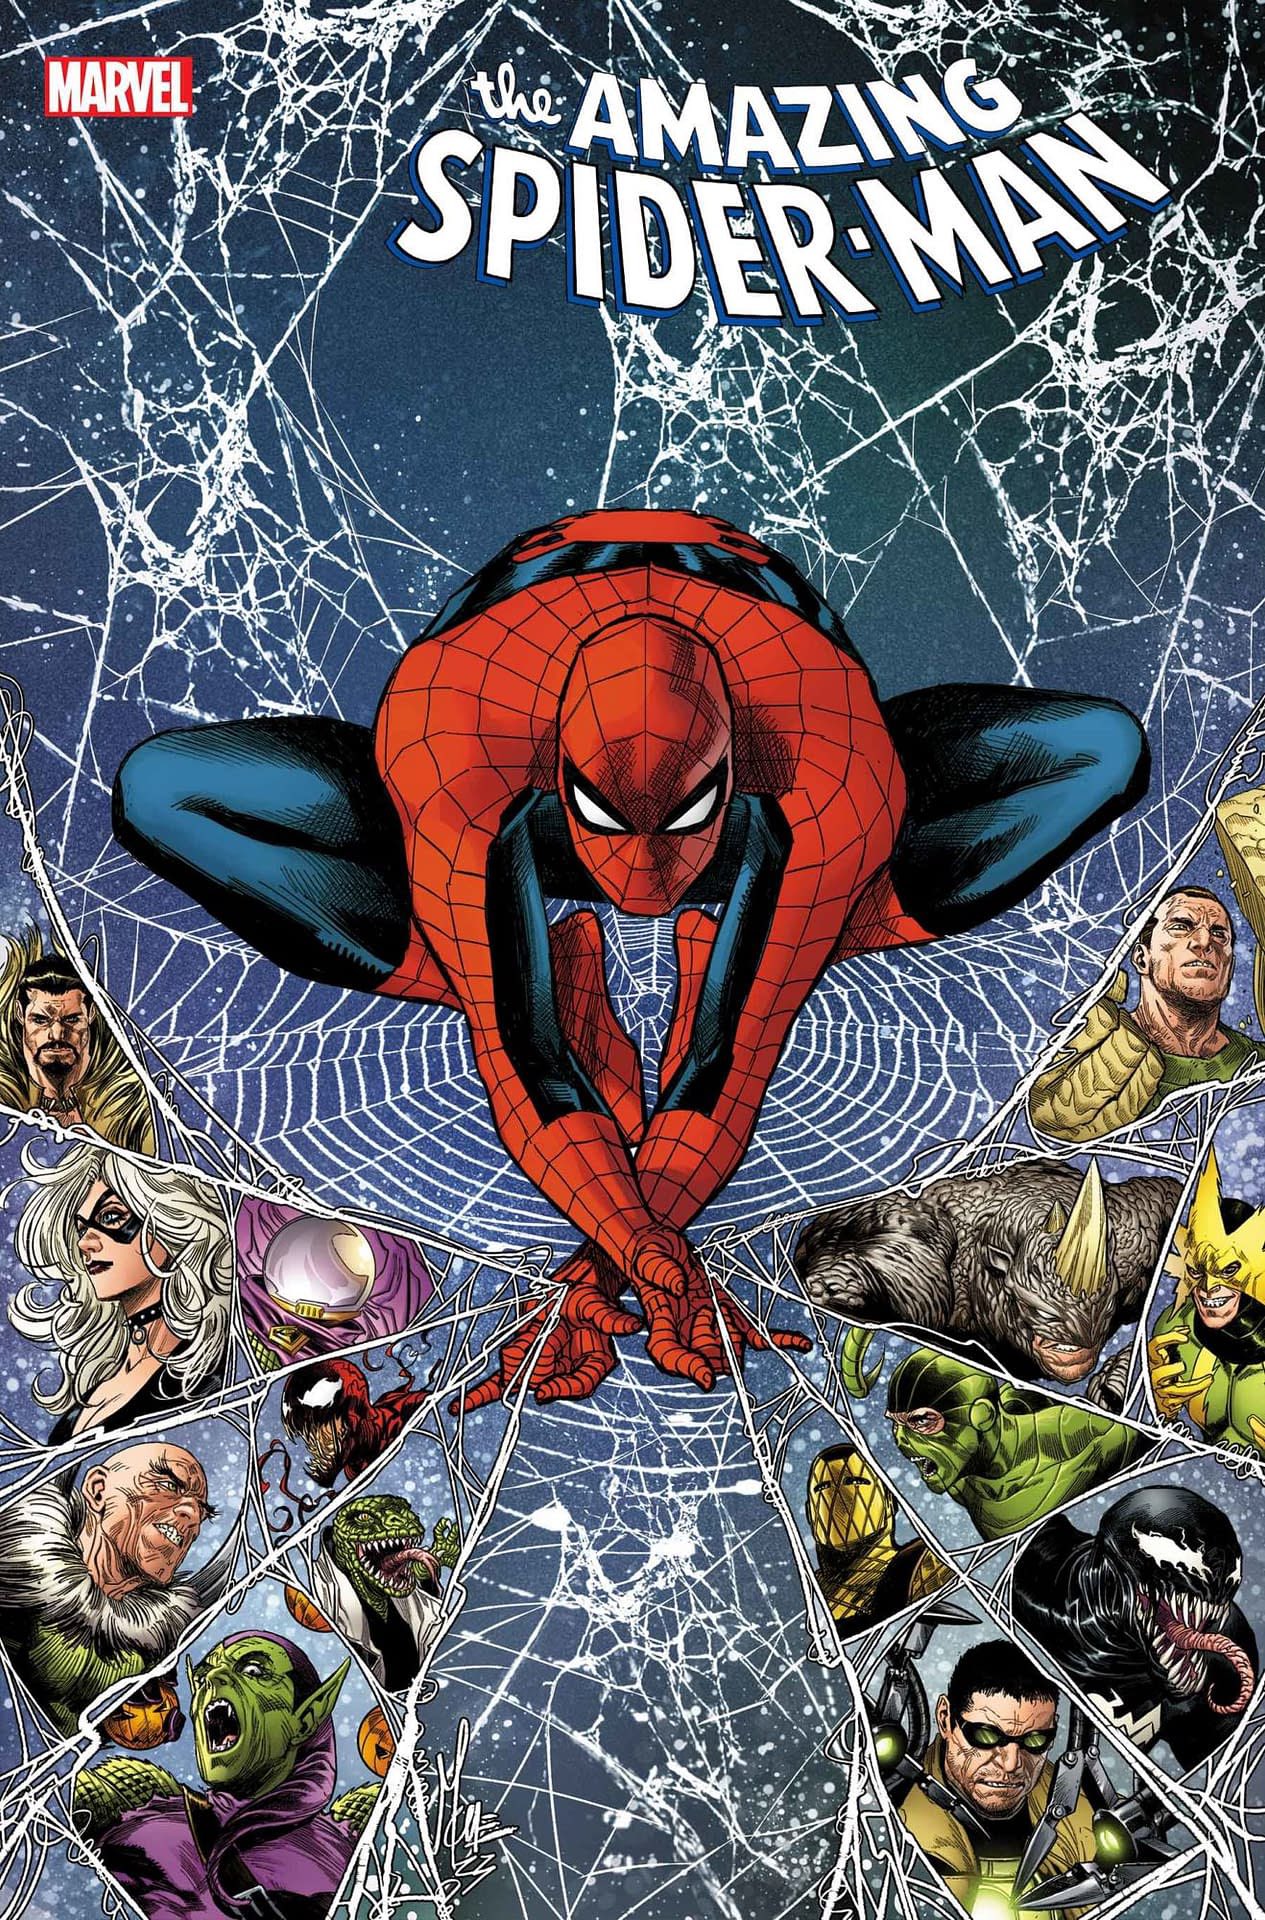 Spider-Man Posters & Wall Art Prints | AllPosters.com